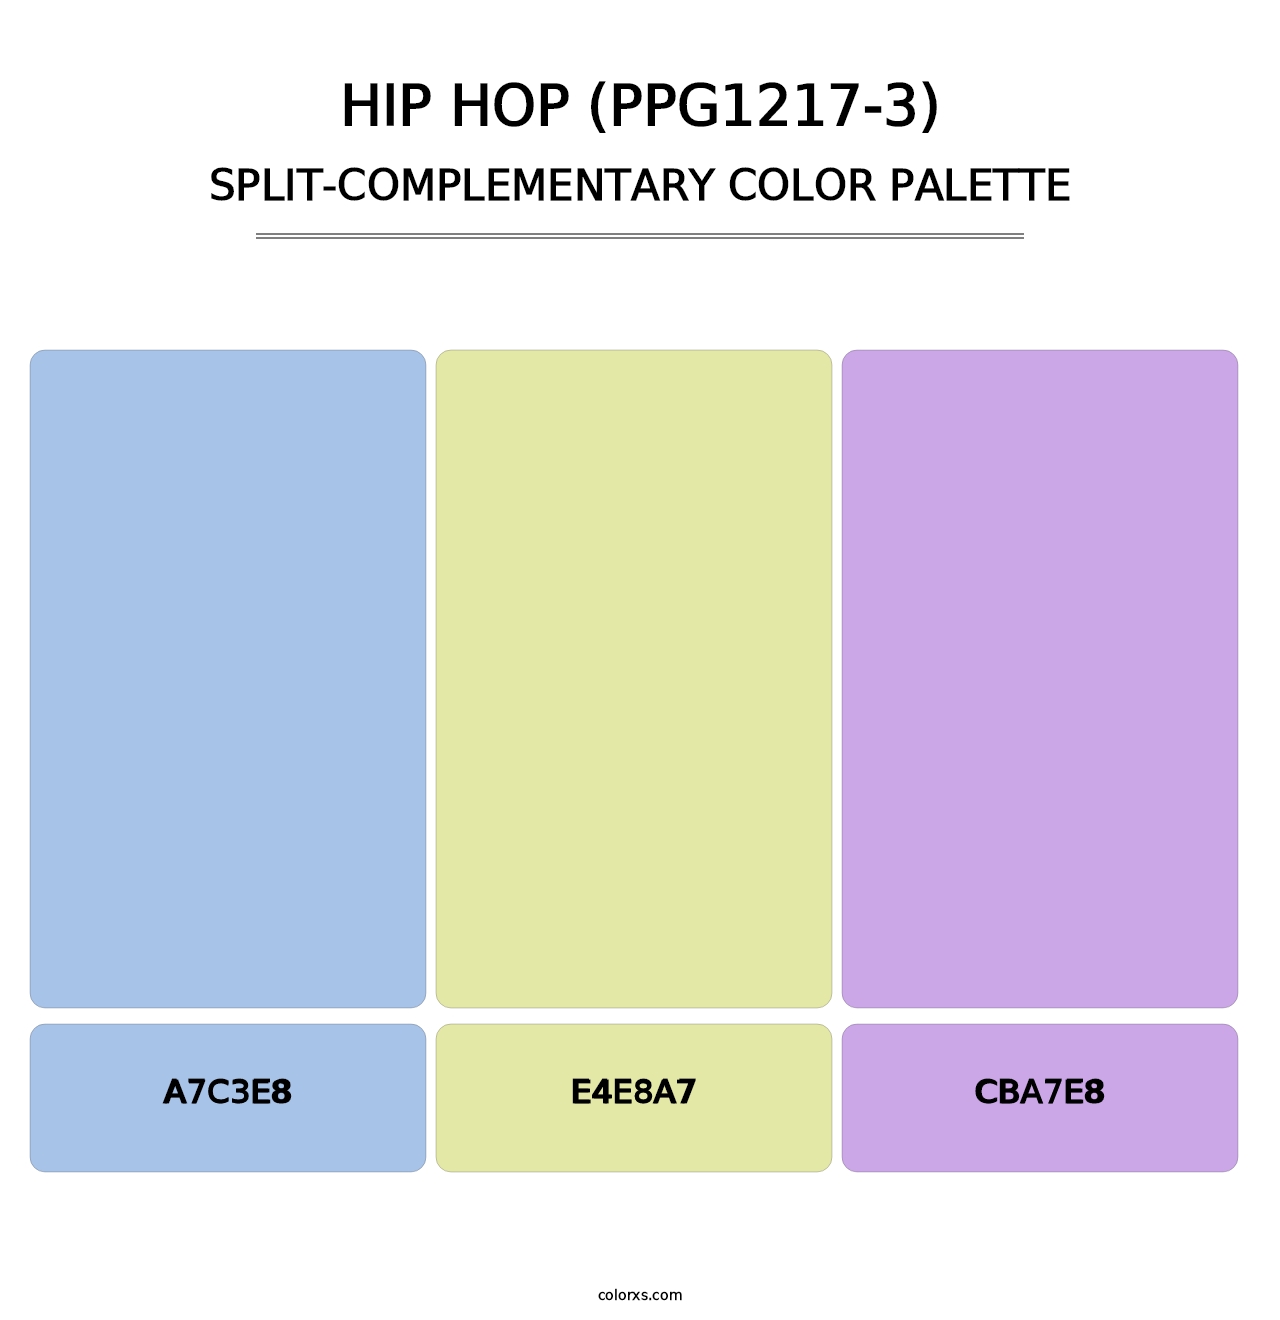 Hip Hop (PPG1217-3) - Split-Complementary Color Palette